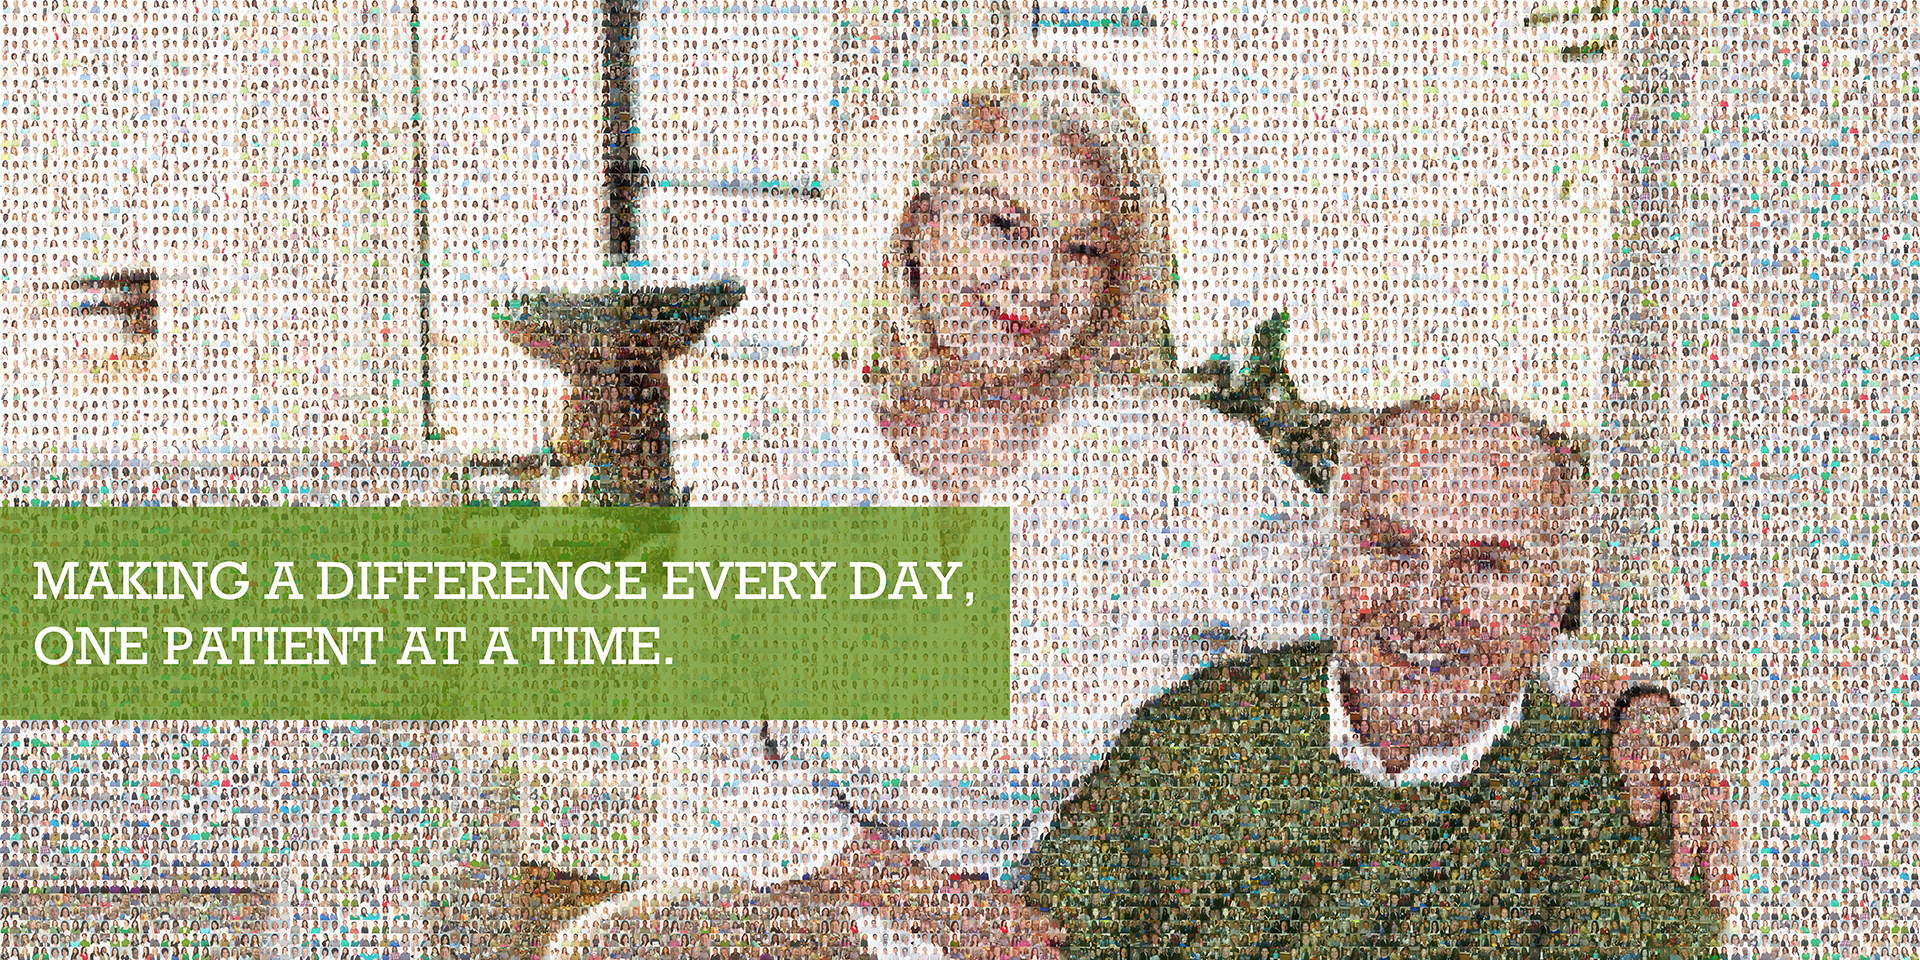 photo mosaic created using almost 1,500 company portraits